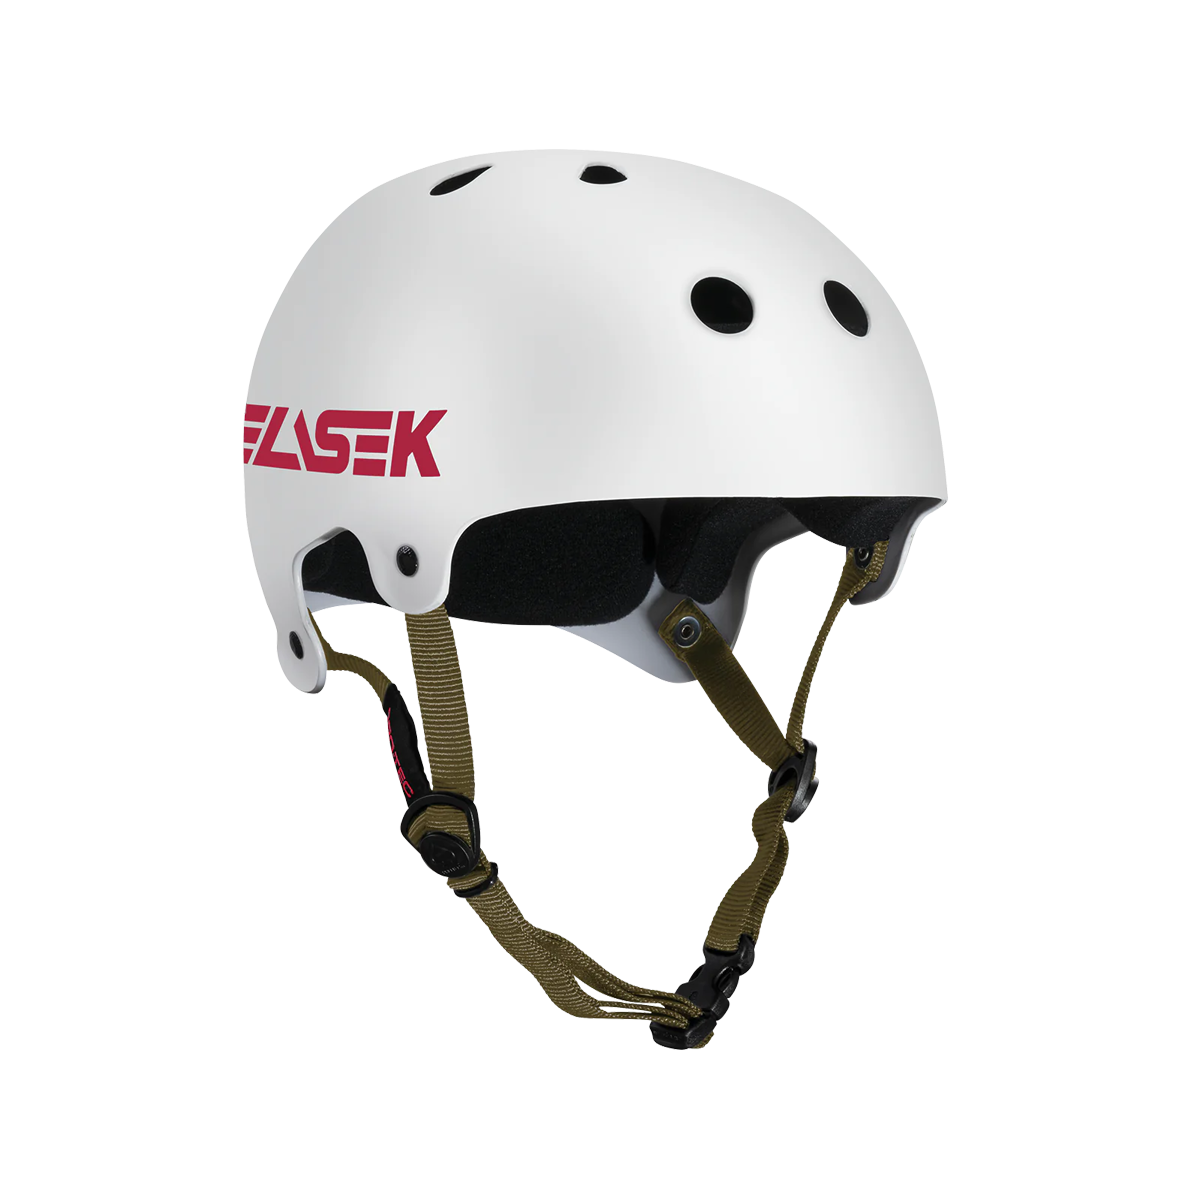 Pro Tec Bucky Skate Helmet - Buckyeah!